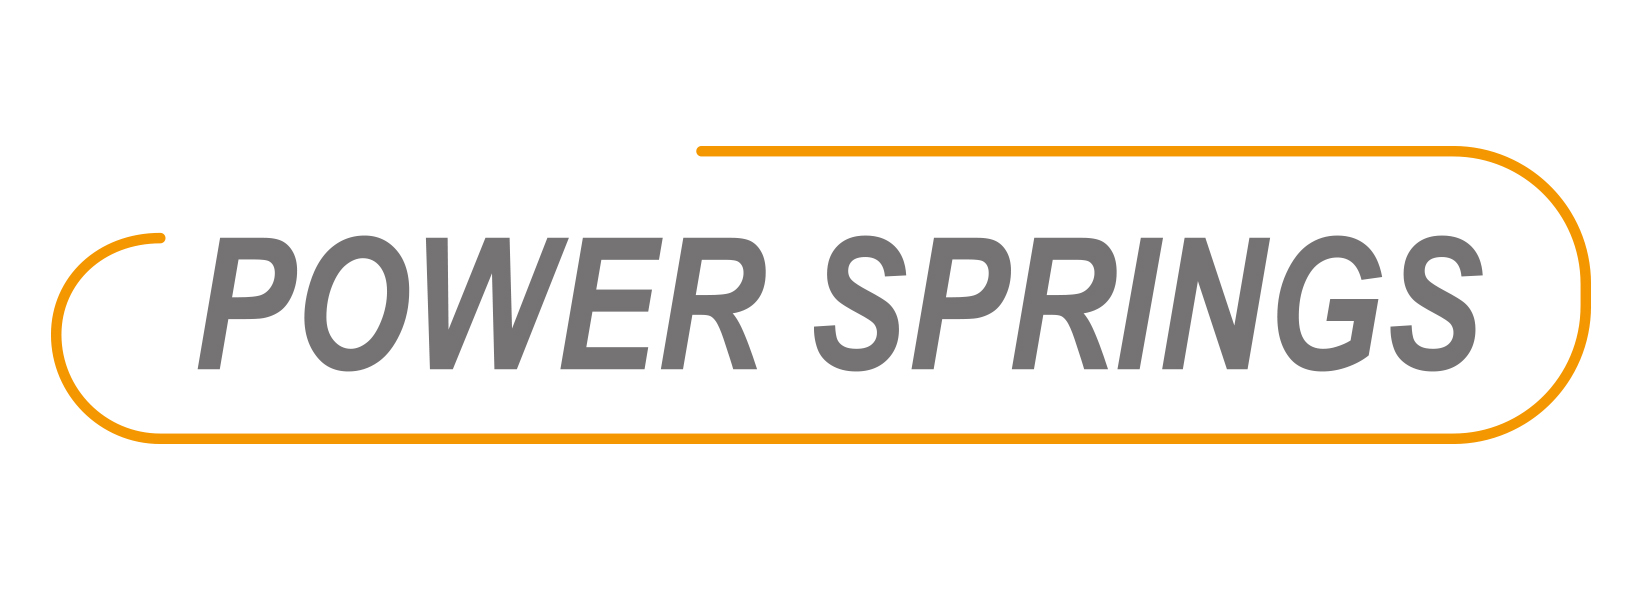 Power Springs for 12, 80 springs 21.5cm - Standard Edition